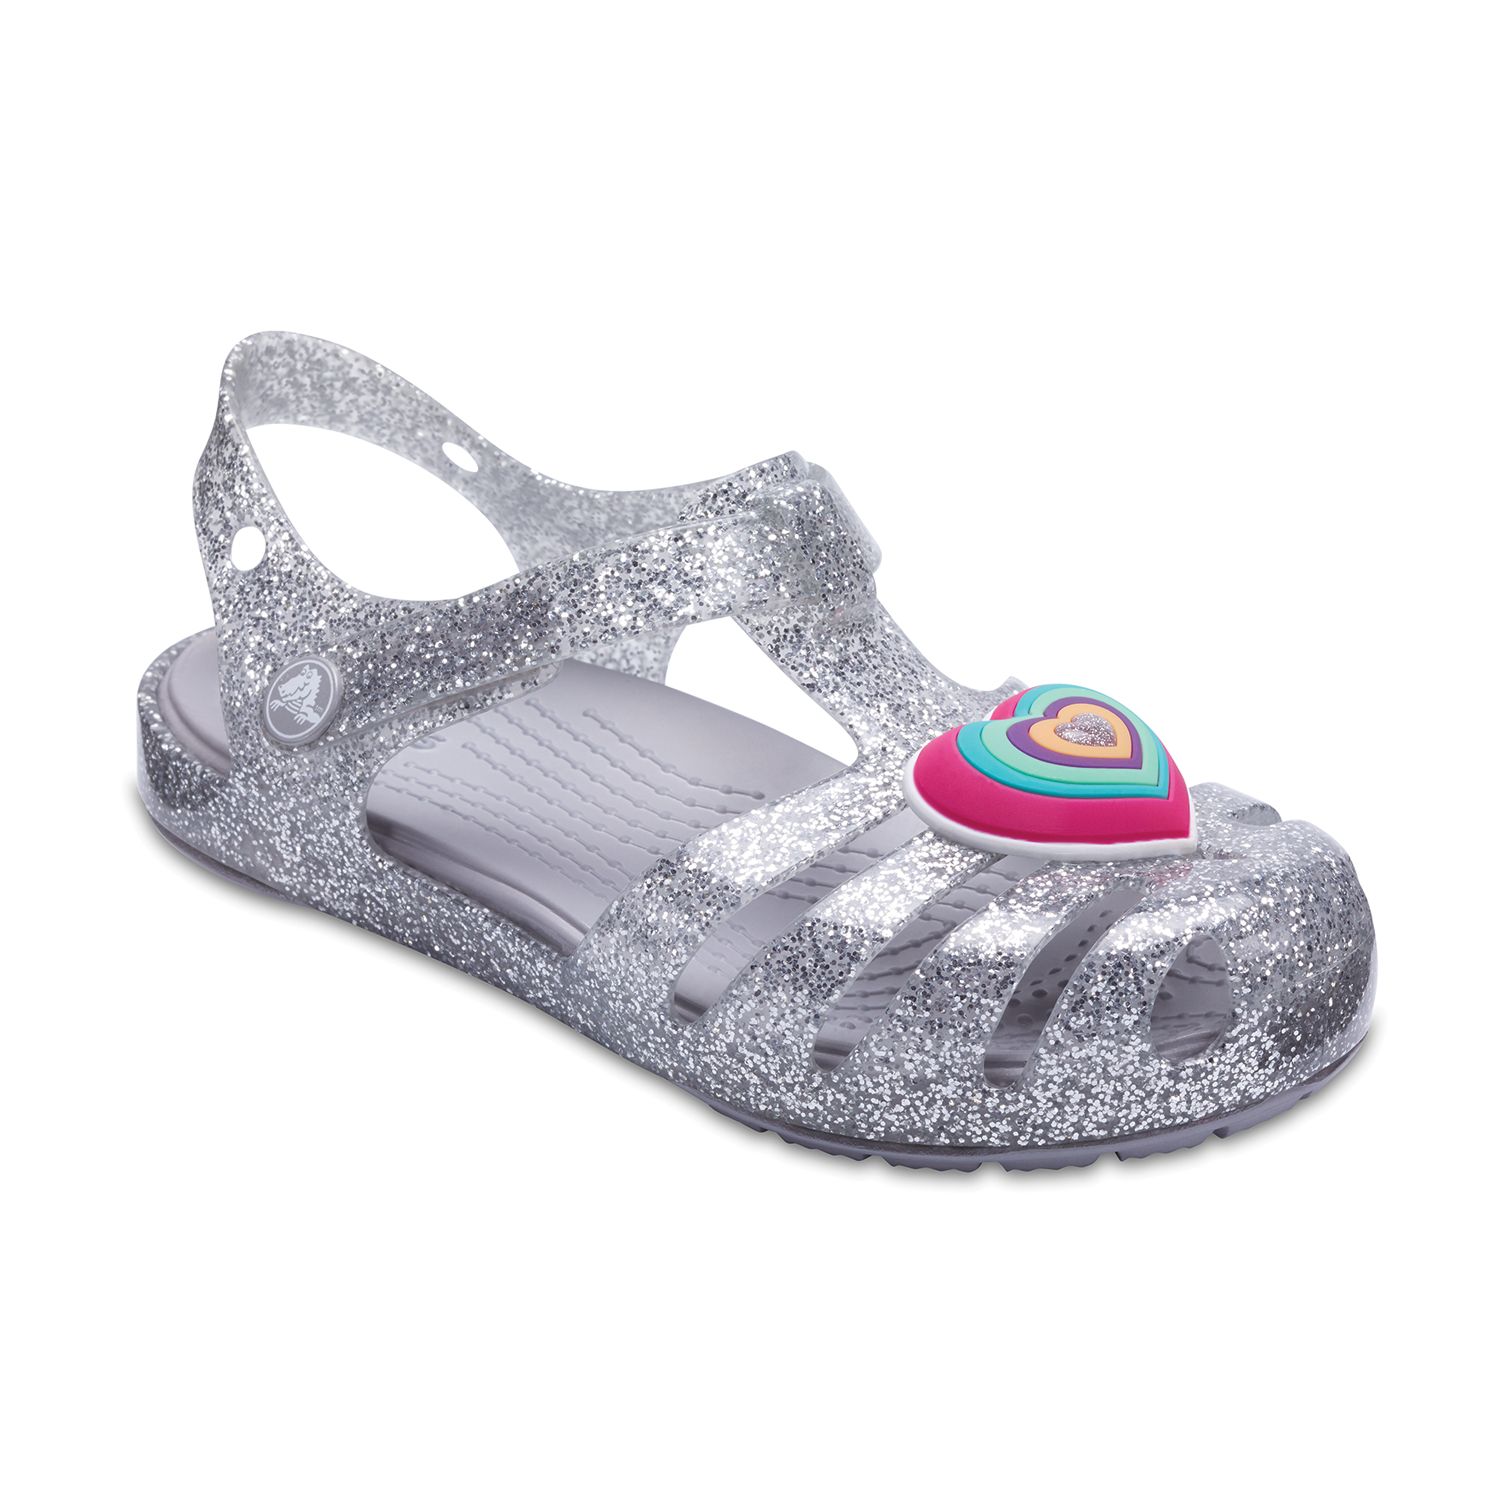 Crocs Isabella Girls' Sandals